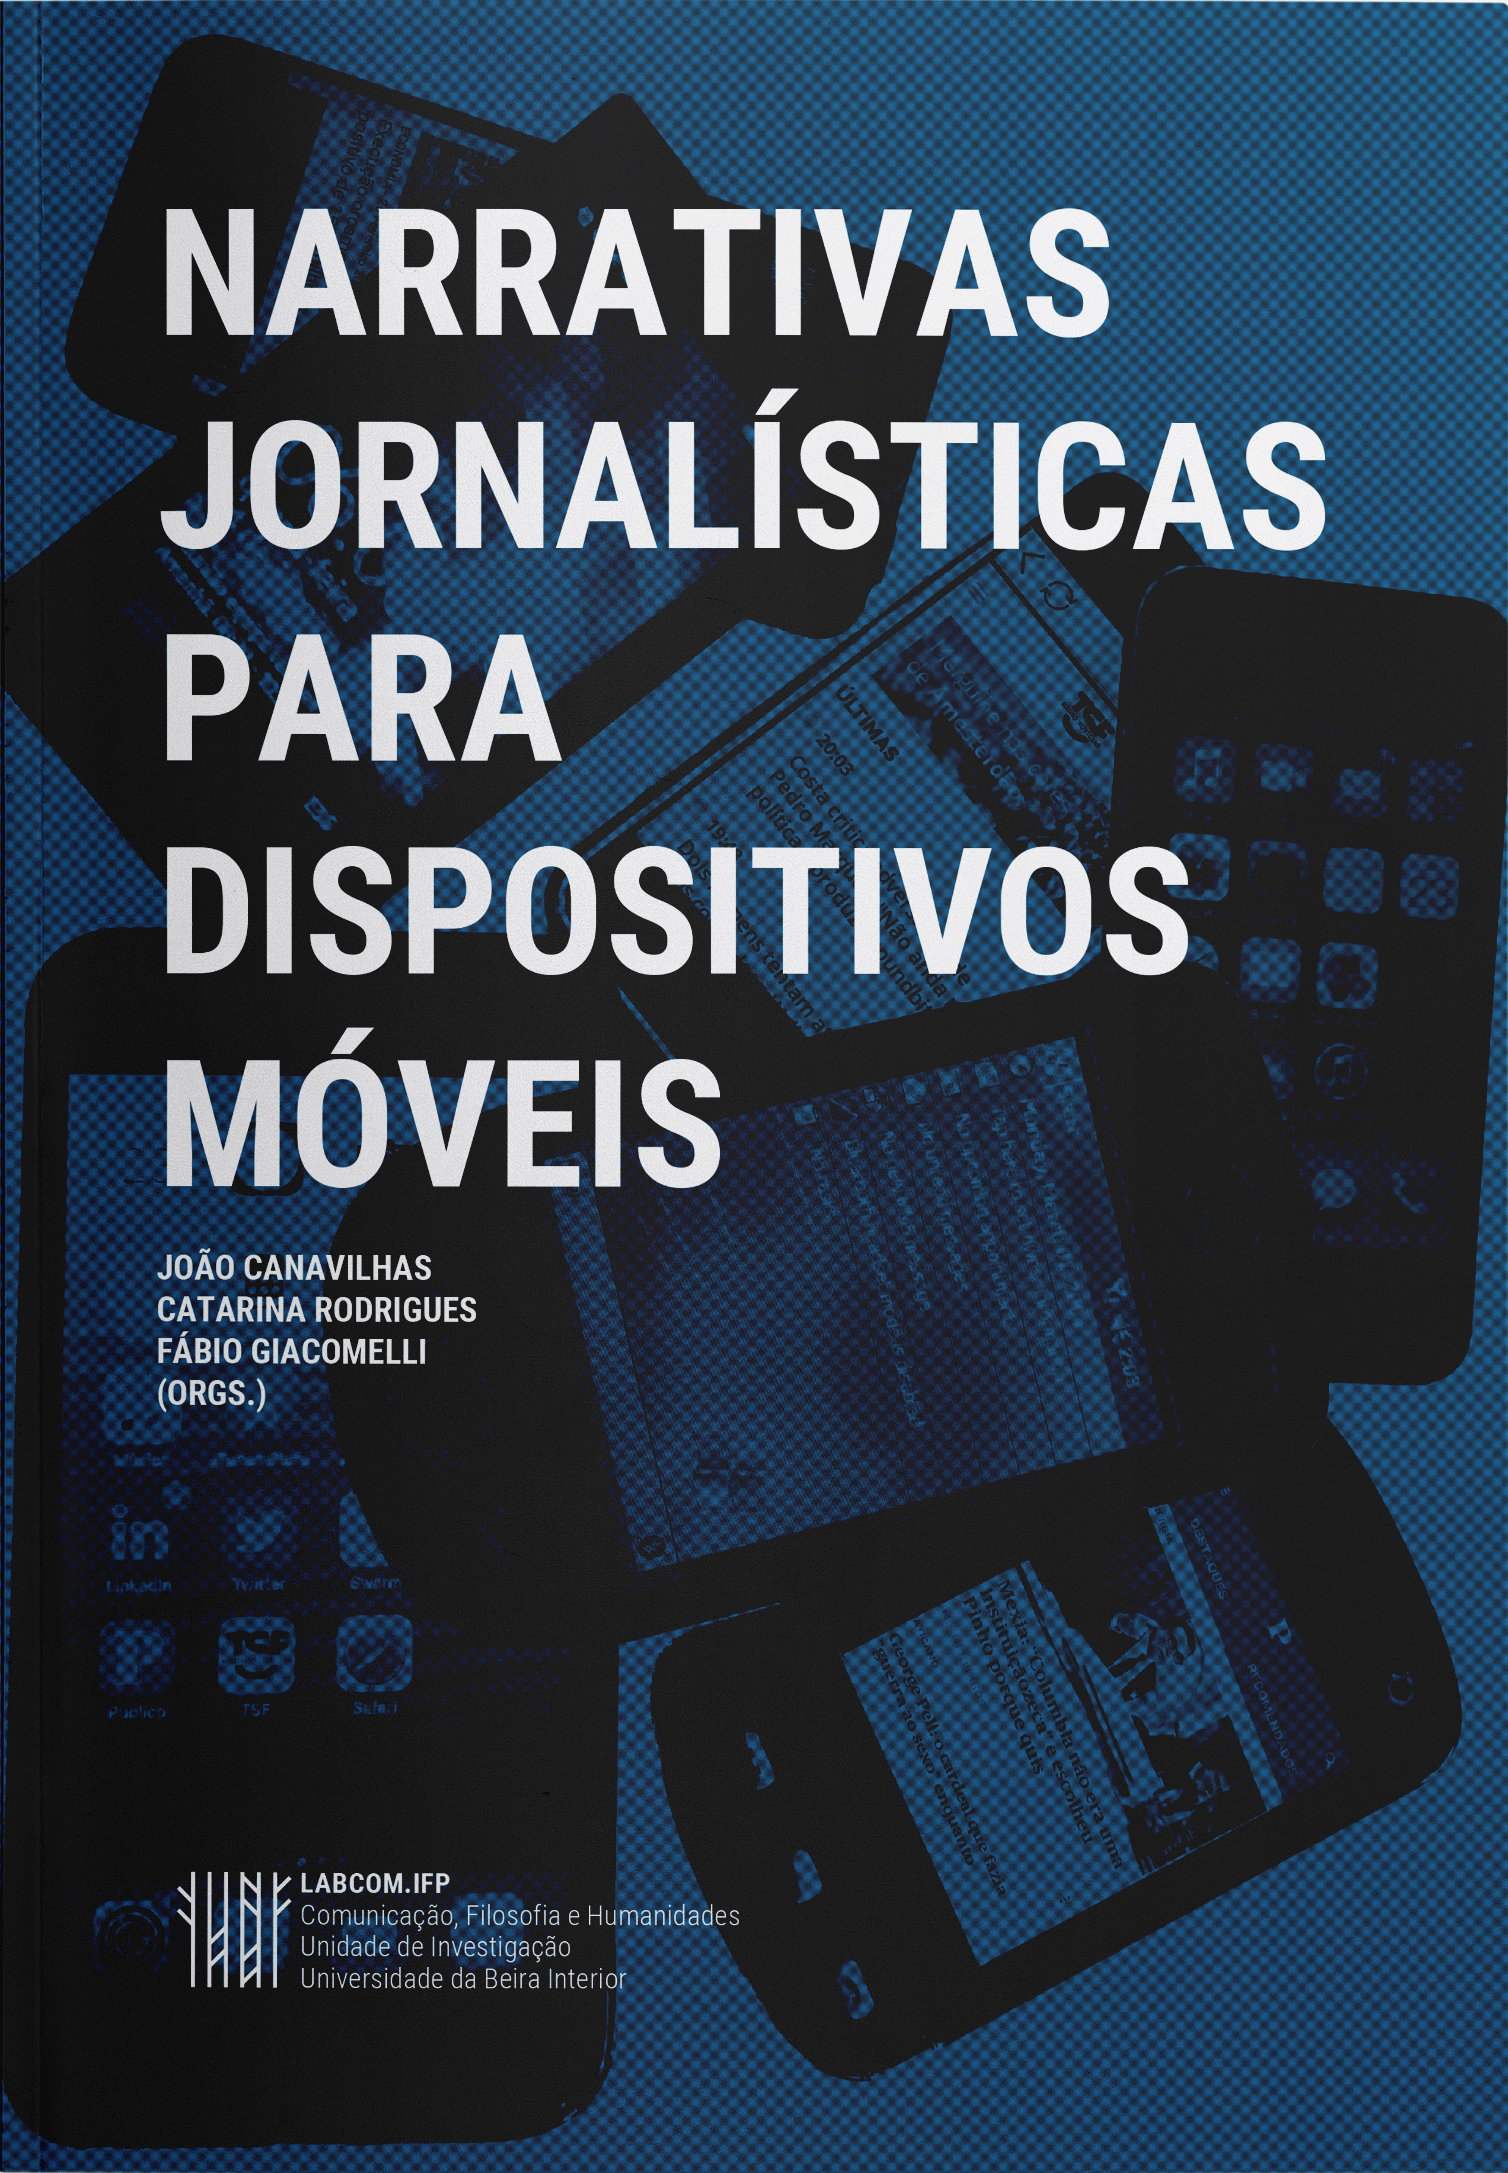 Imagen de portada del libro Narrativas jornalísticas para dispositivos móveis